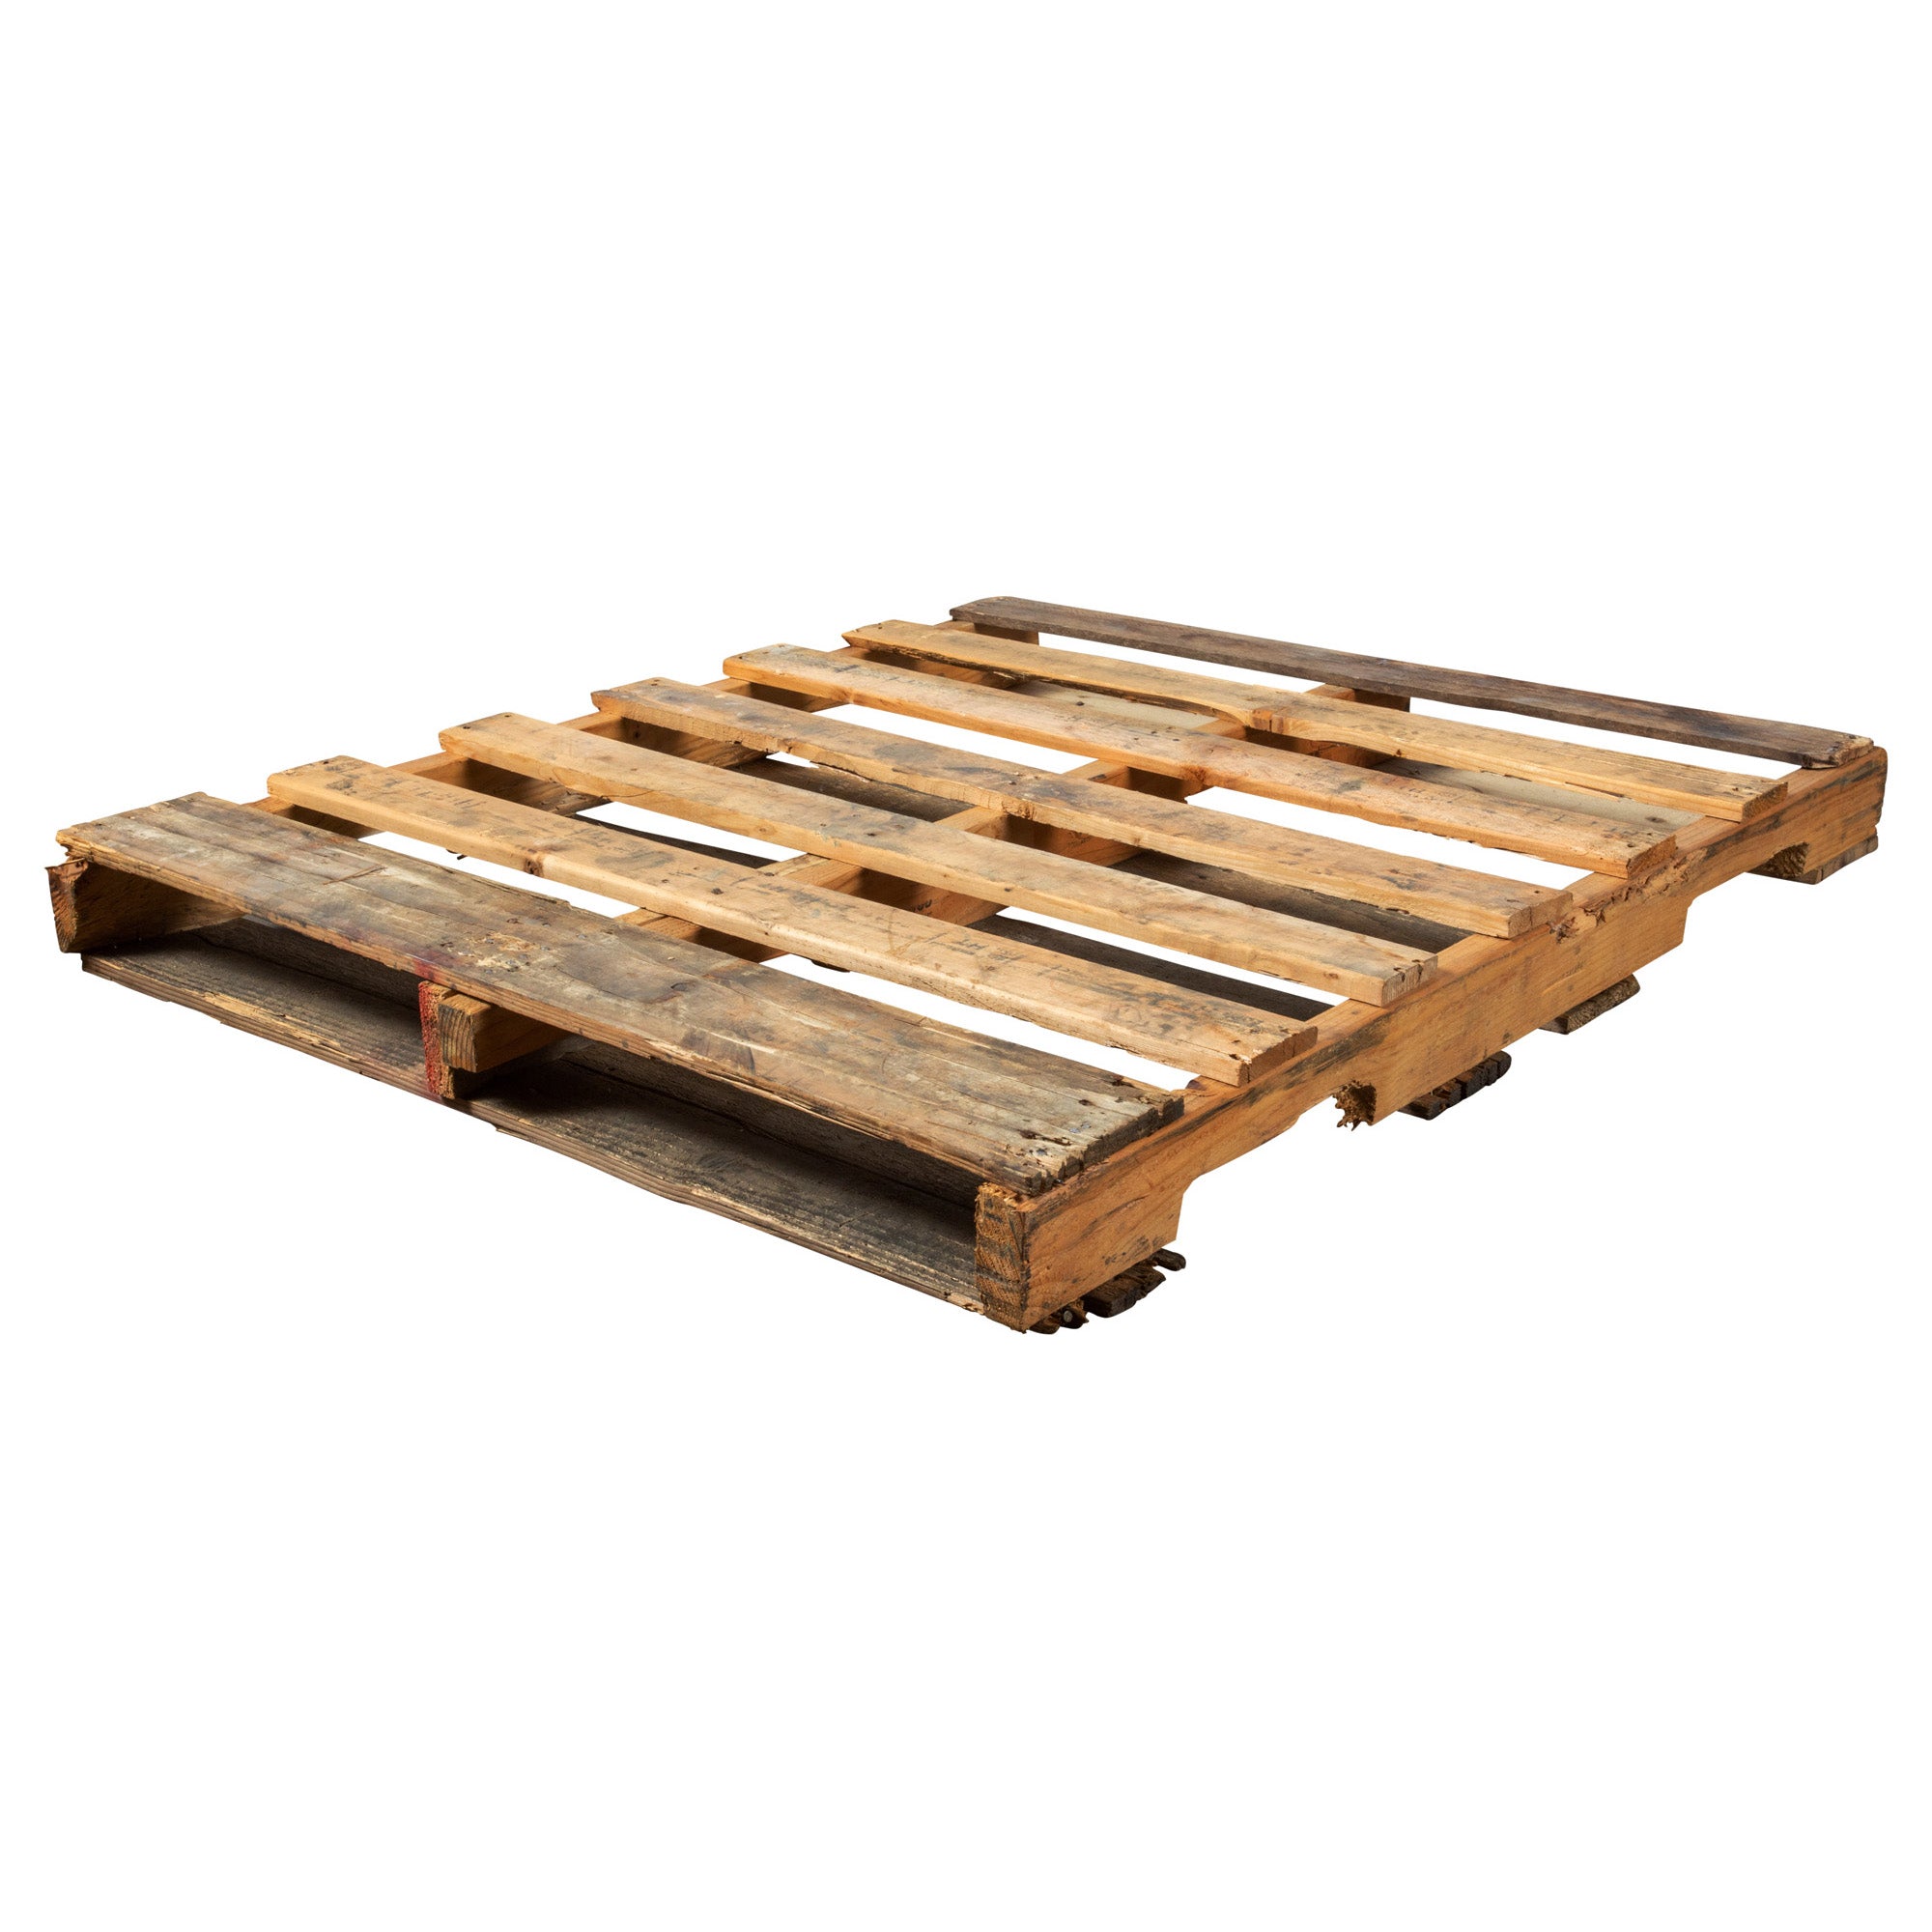 48" x 40” B Grade Wood Pallet